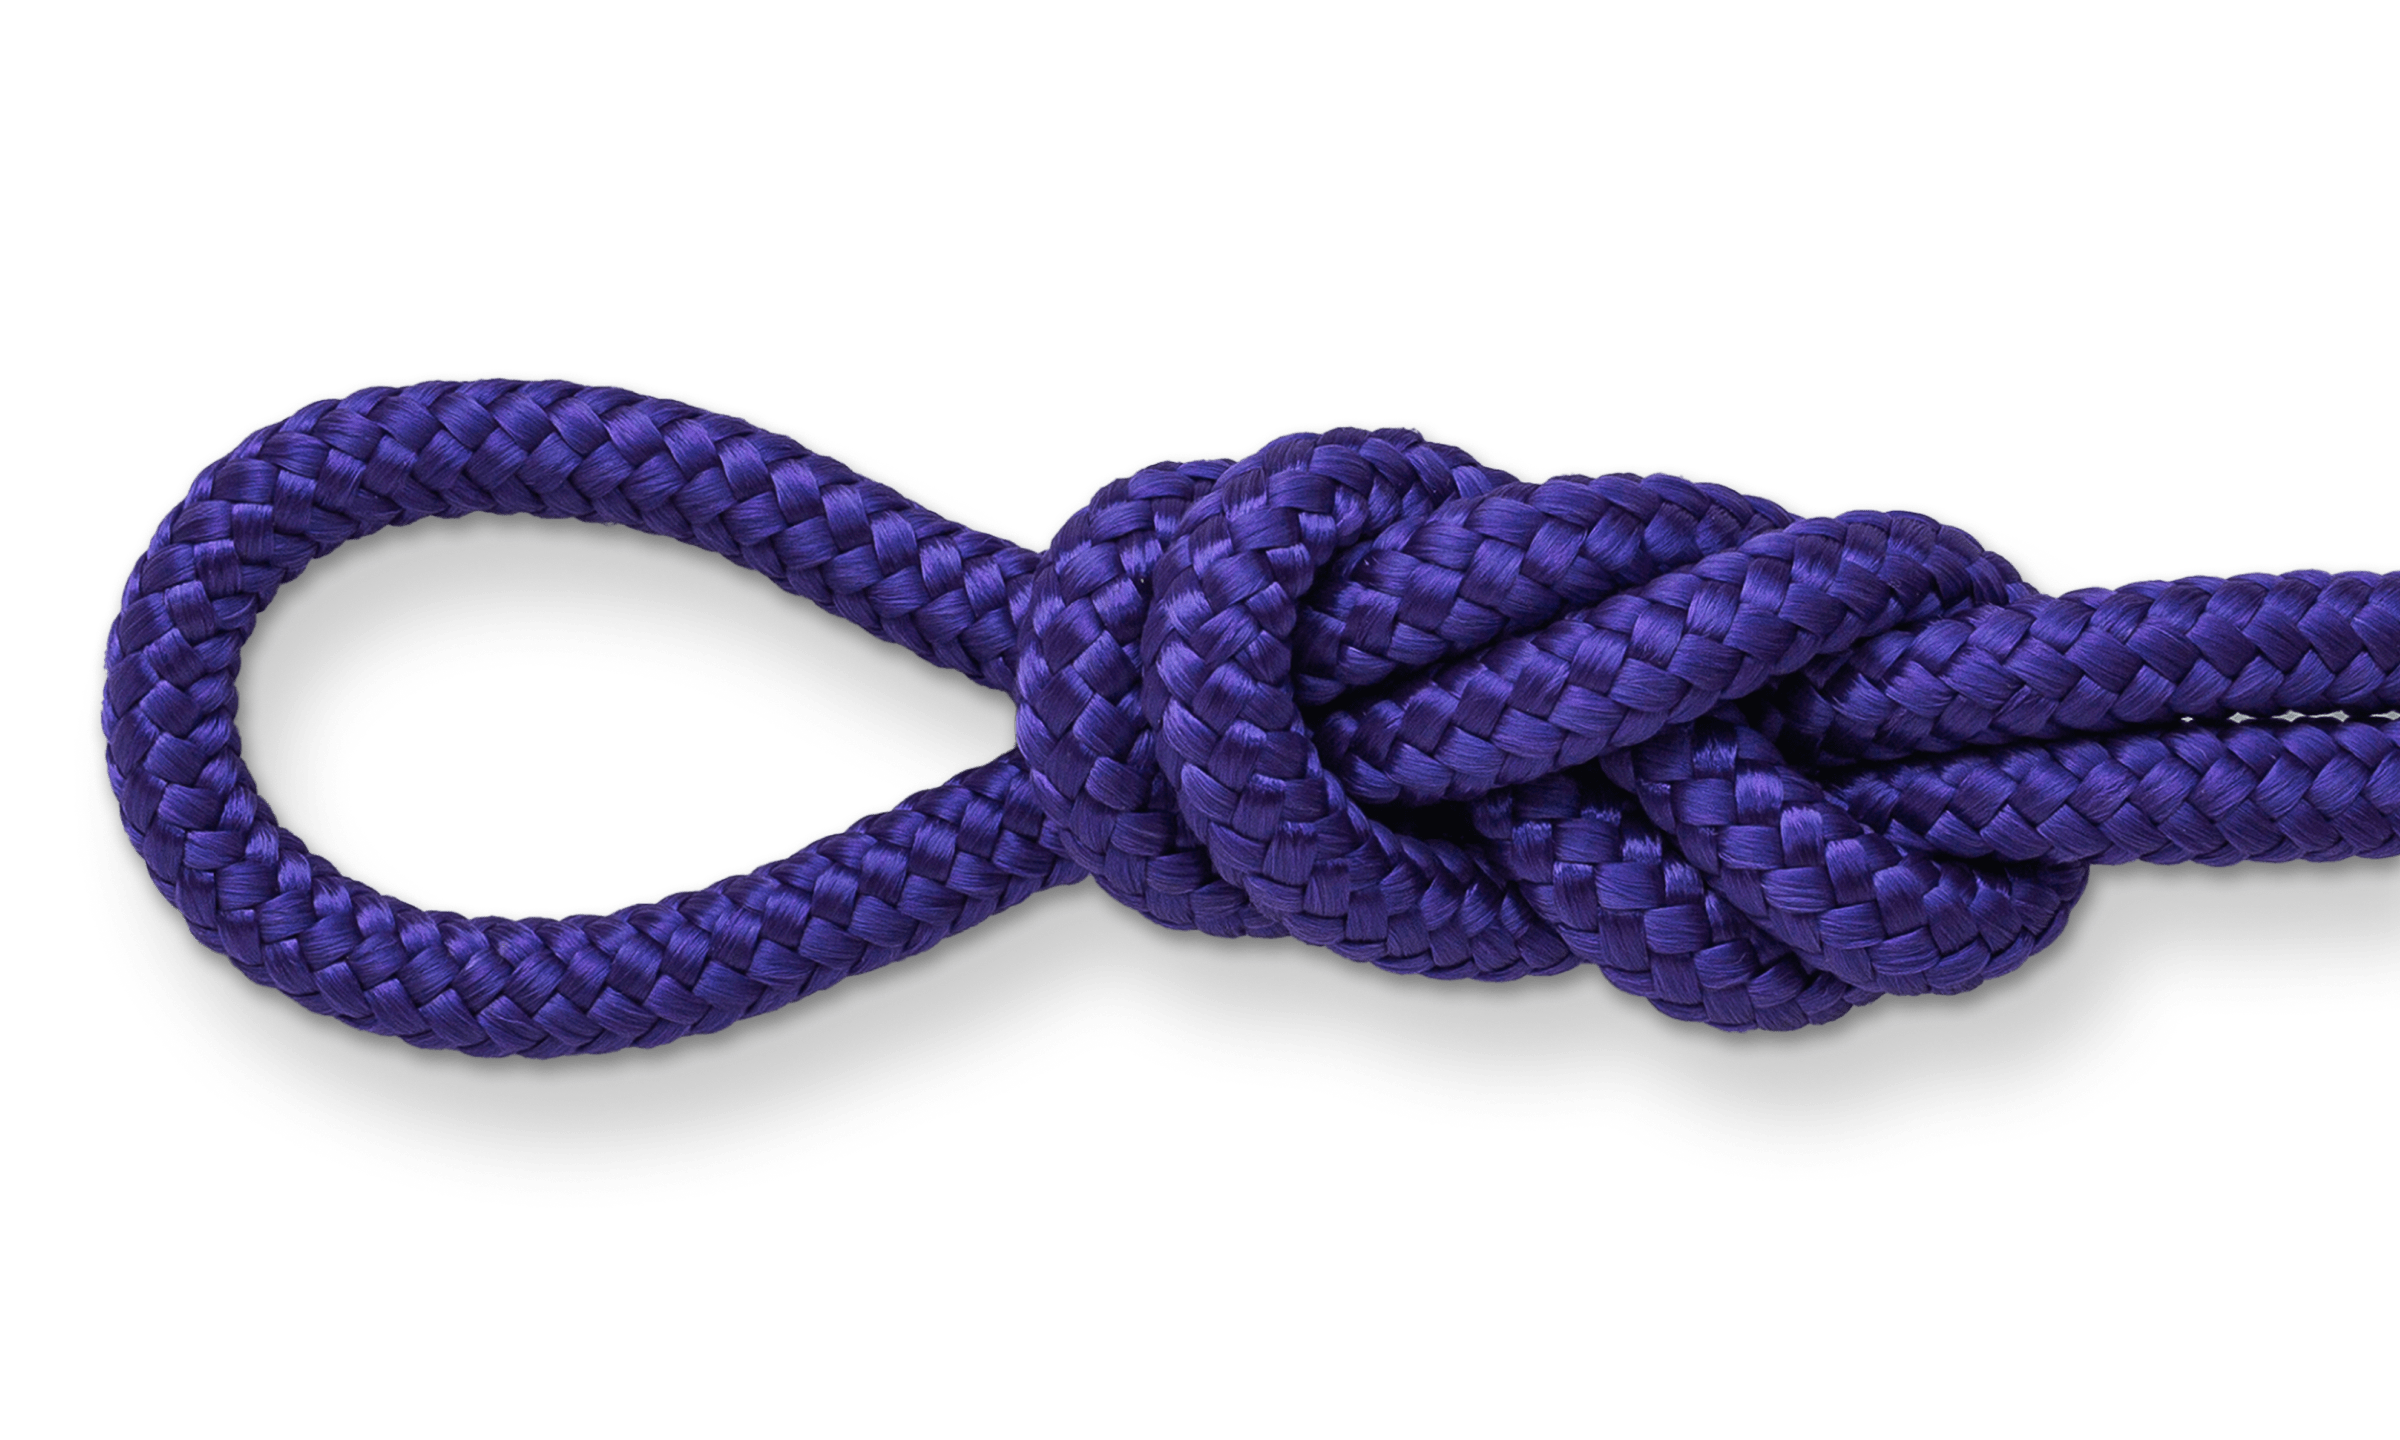 purple diamond braid polypro rope